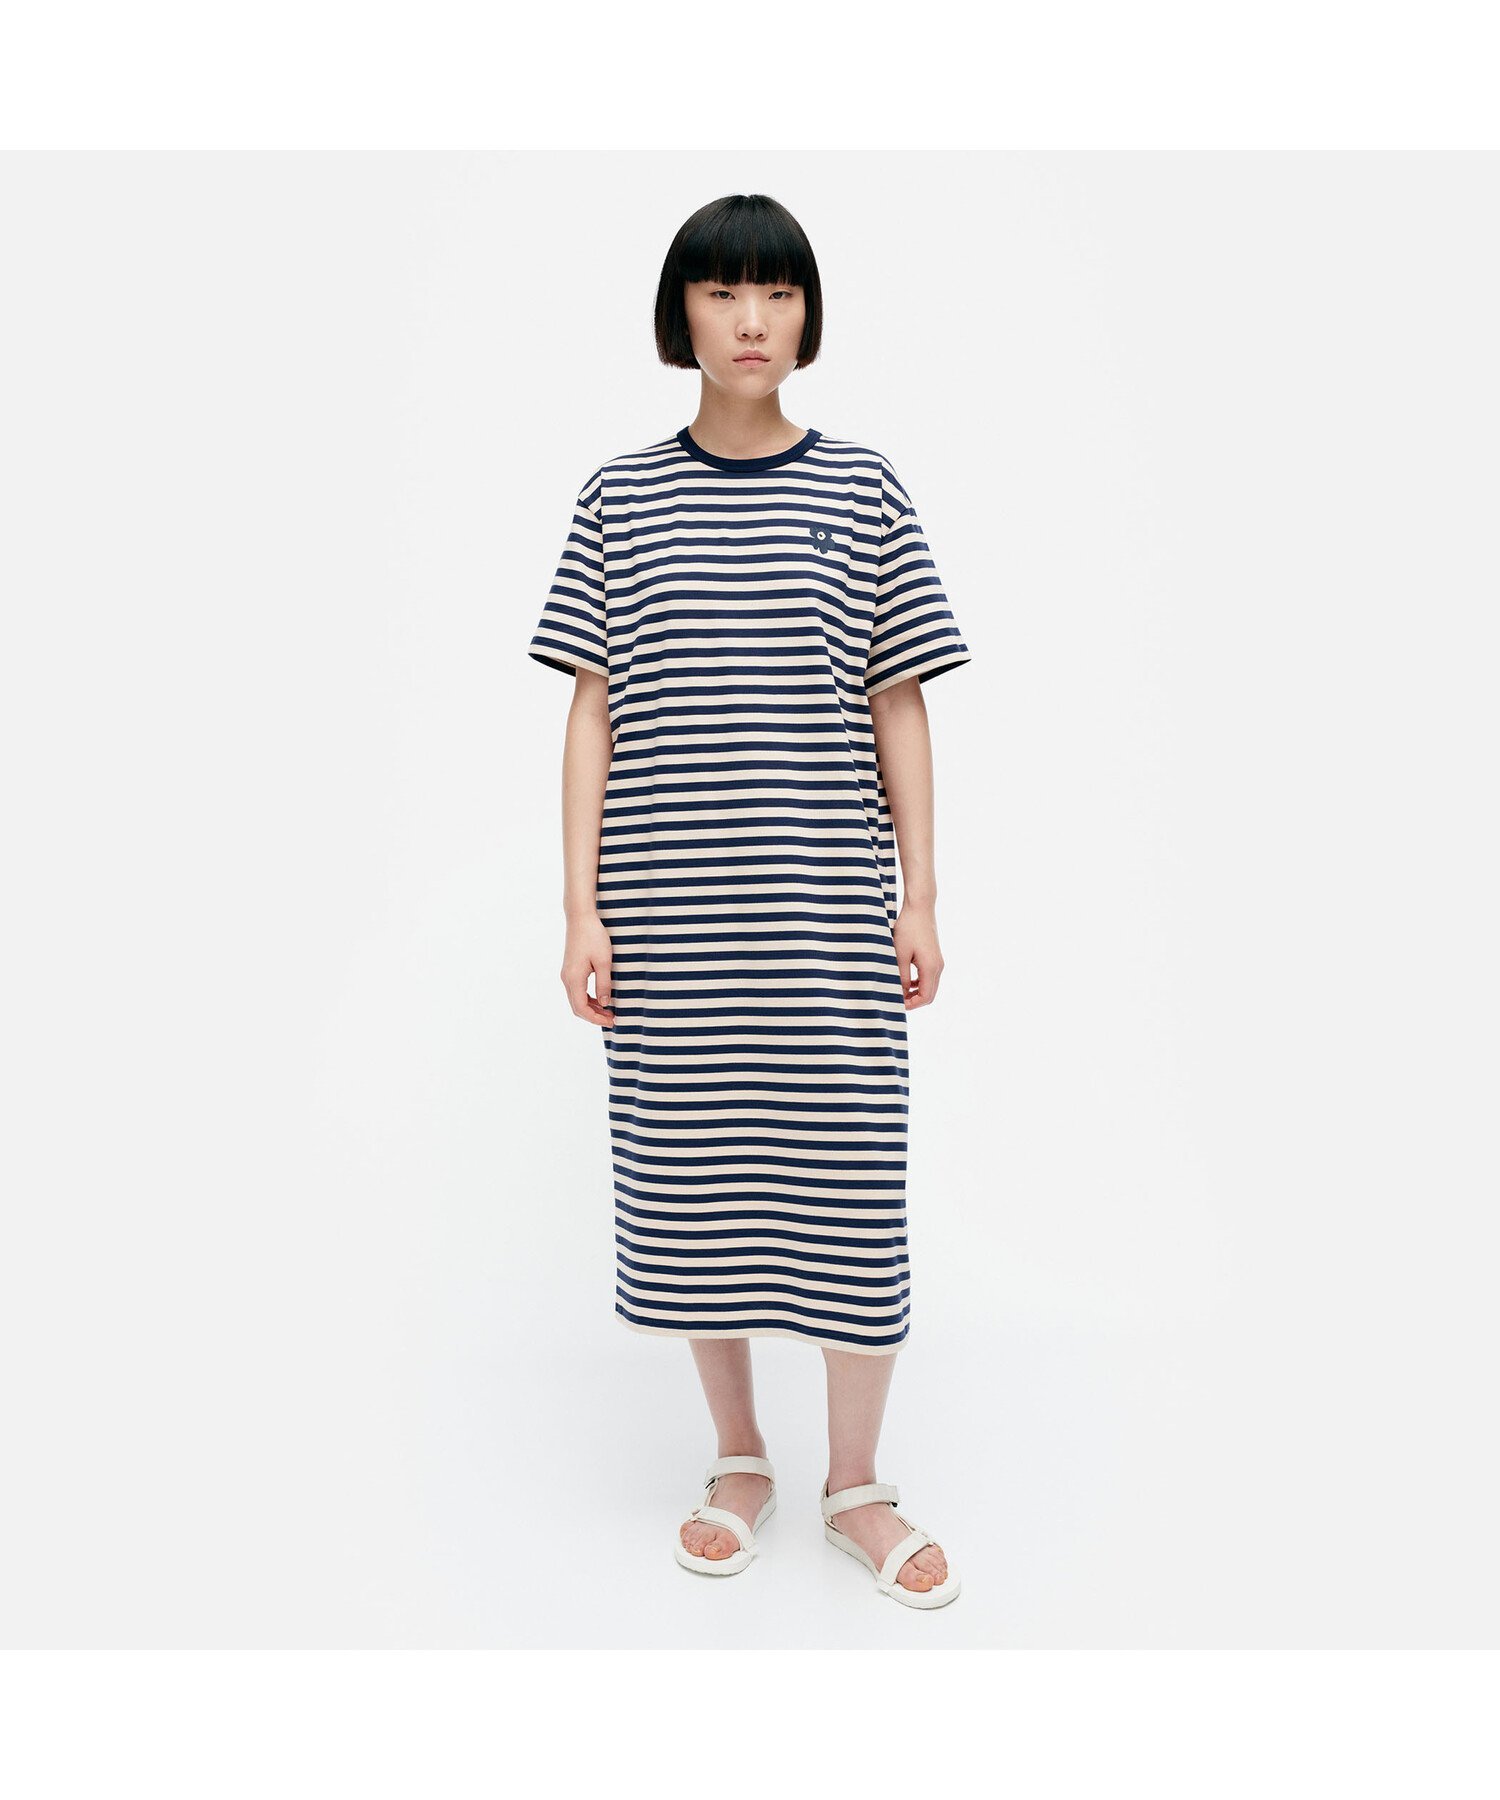 Marimekko Kioski Tasaraita Oversized ワンピース マリメッコ ワンピース・ドレス ワンピース【送料無料】